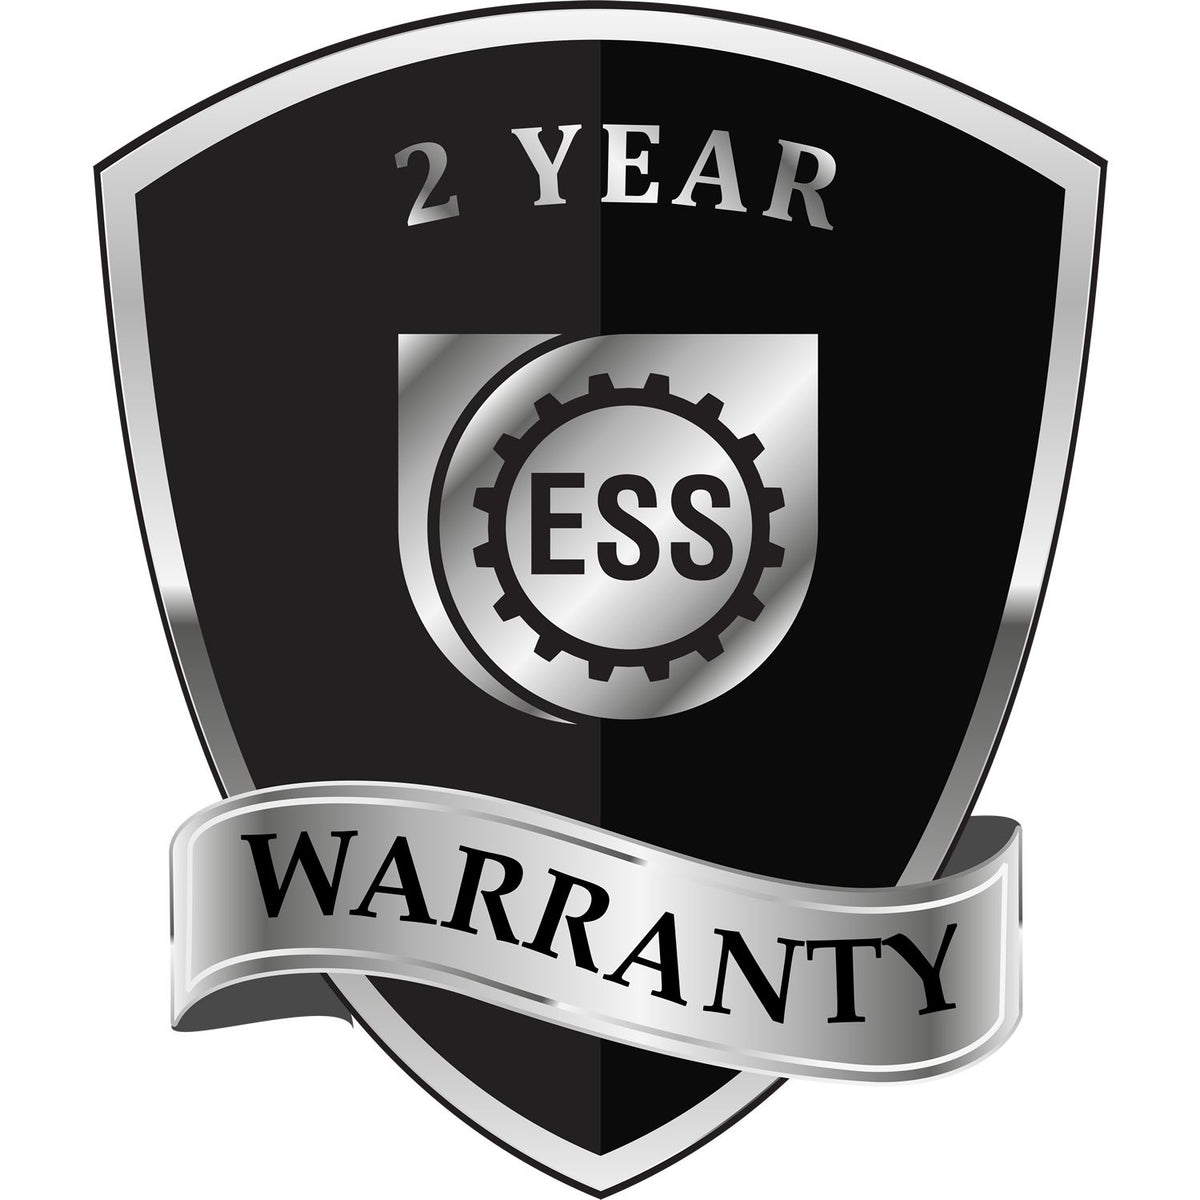 A black and silver badge or emblem showing warranty information for the Soft Nebraska Professional Geologist Seal